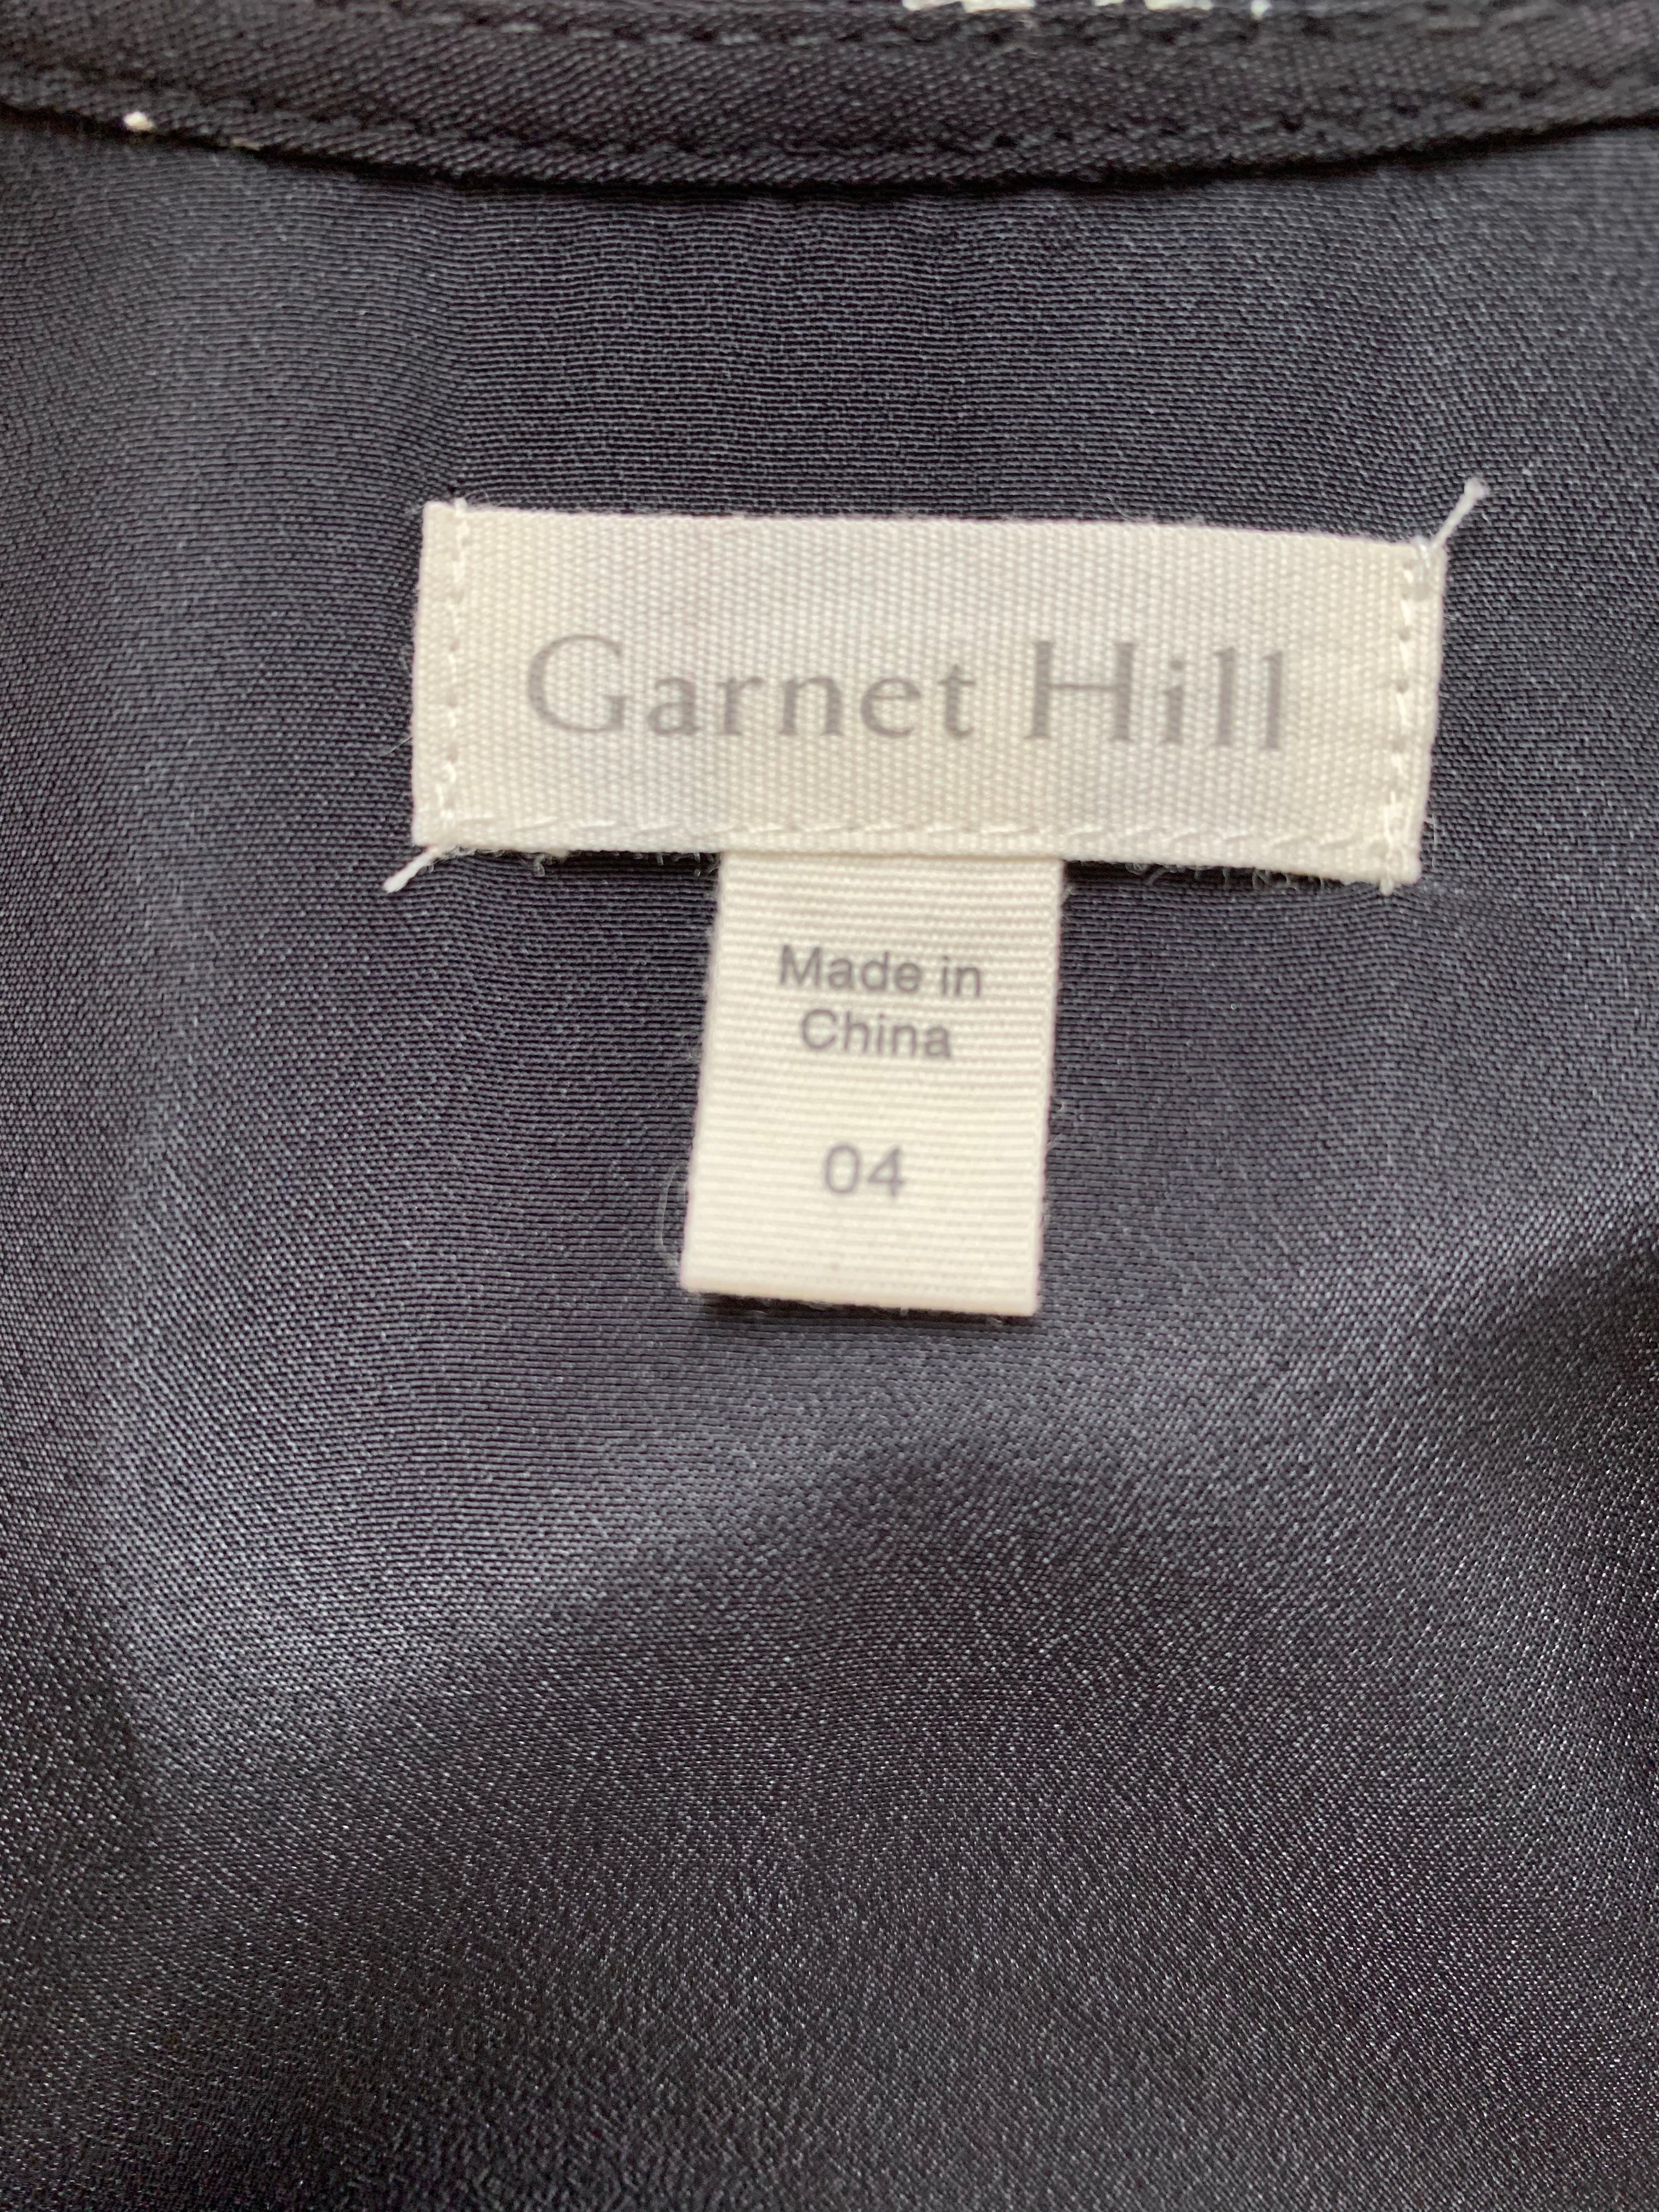 Garnet Hill Black Dress, 4